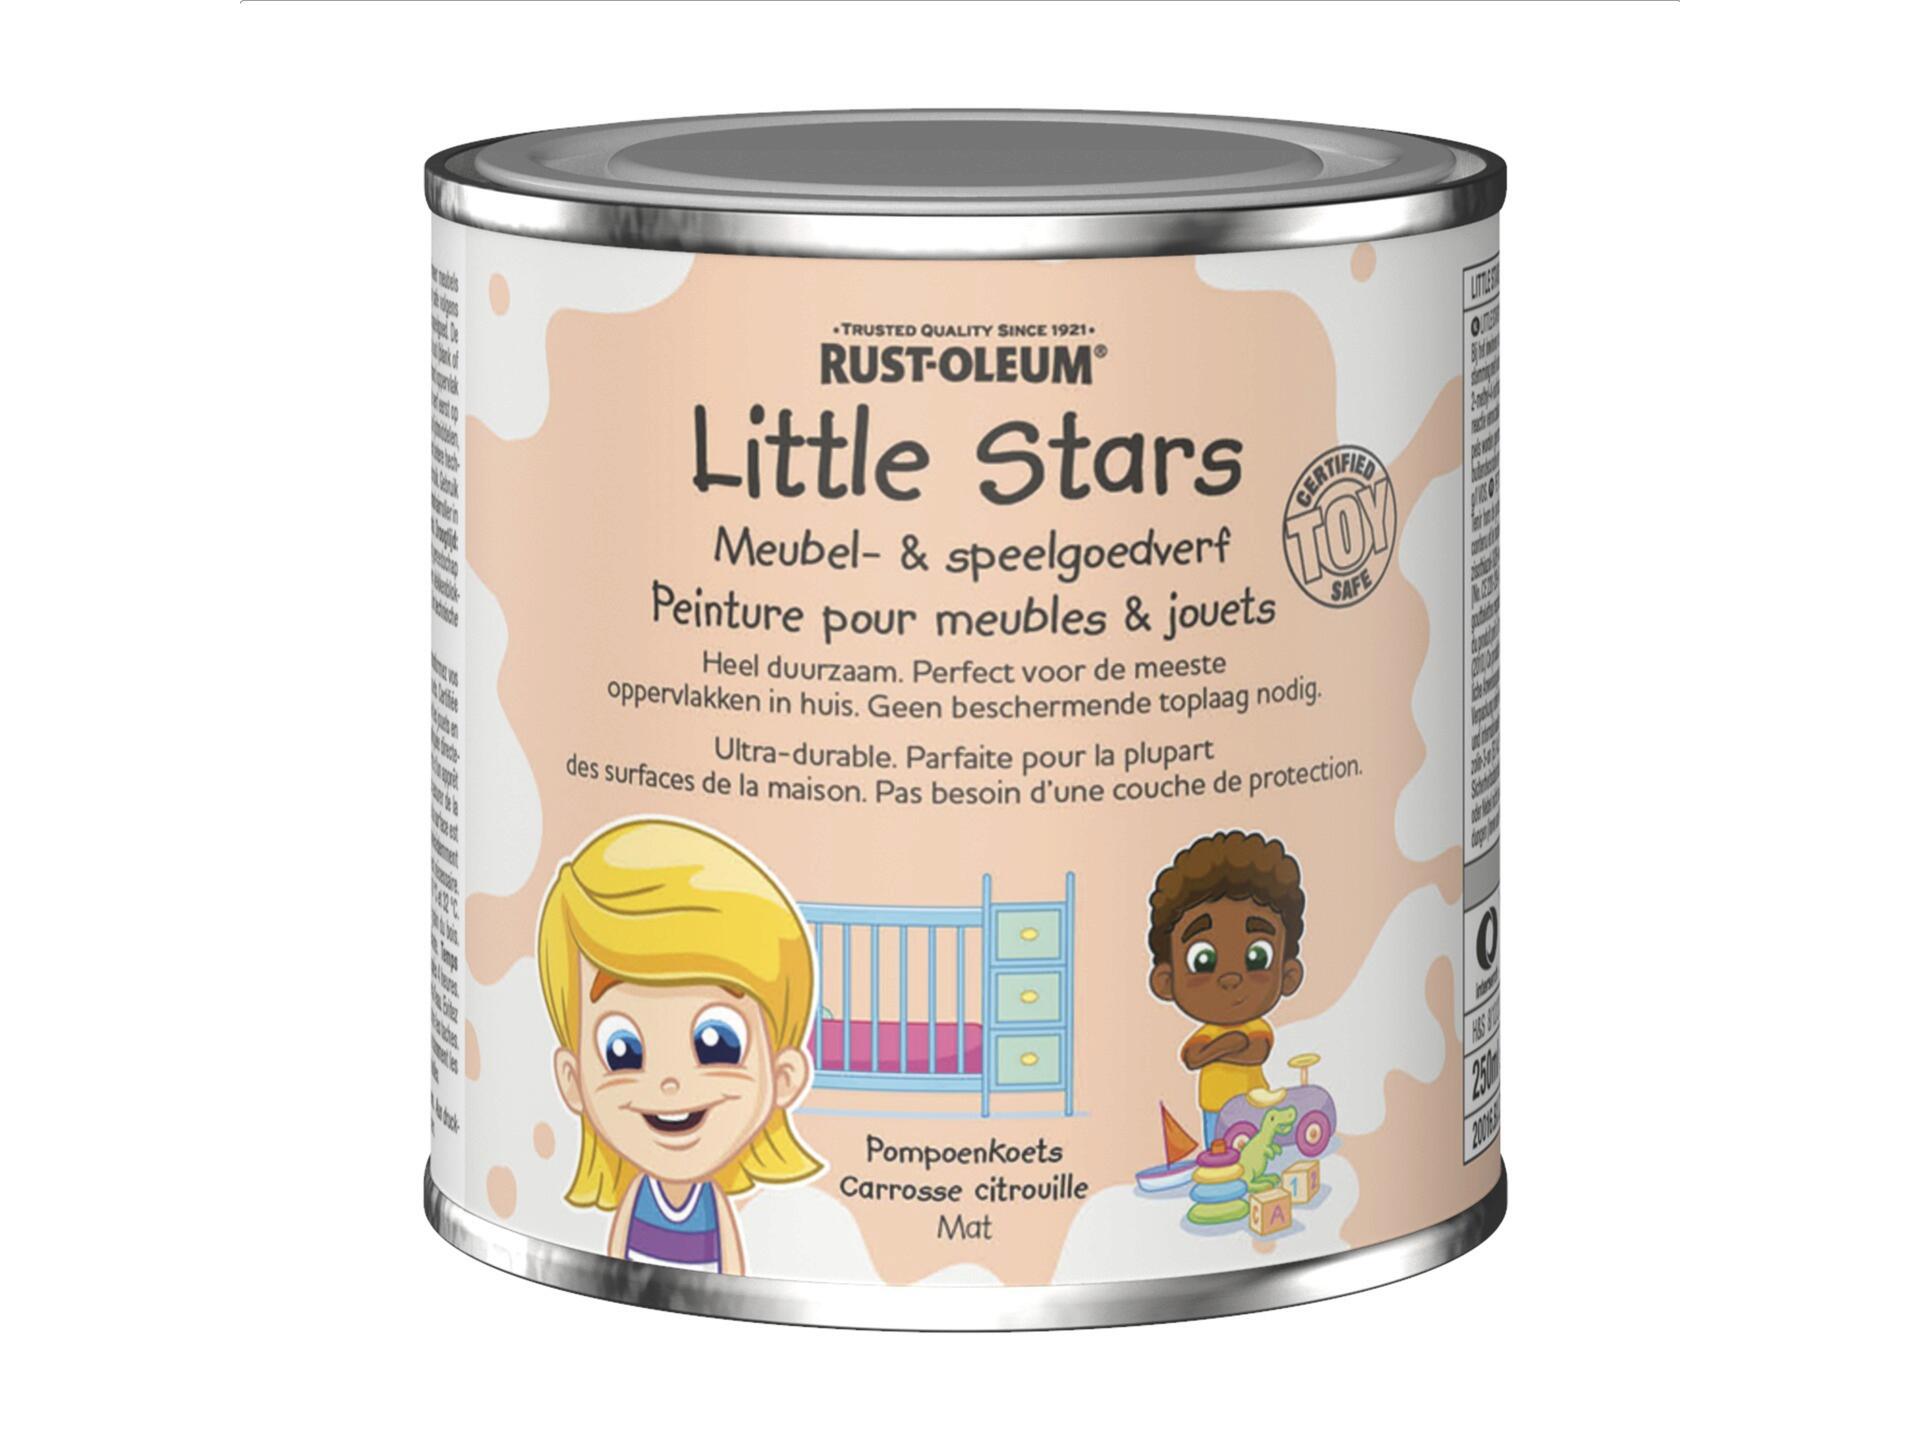 Rust-oleum Little Stars meubel- en speelgoedverf 250ml pompoenkoets